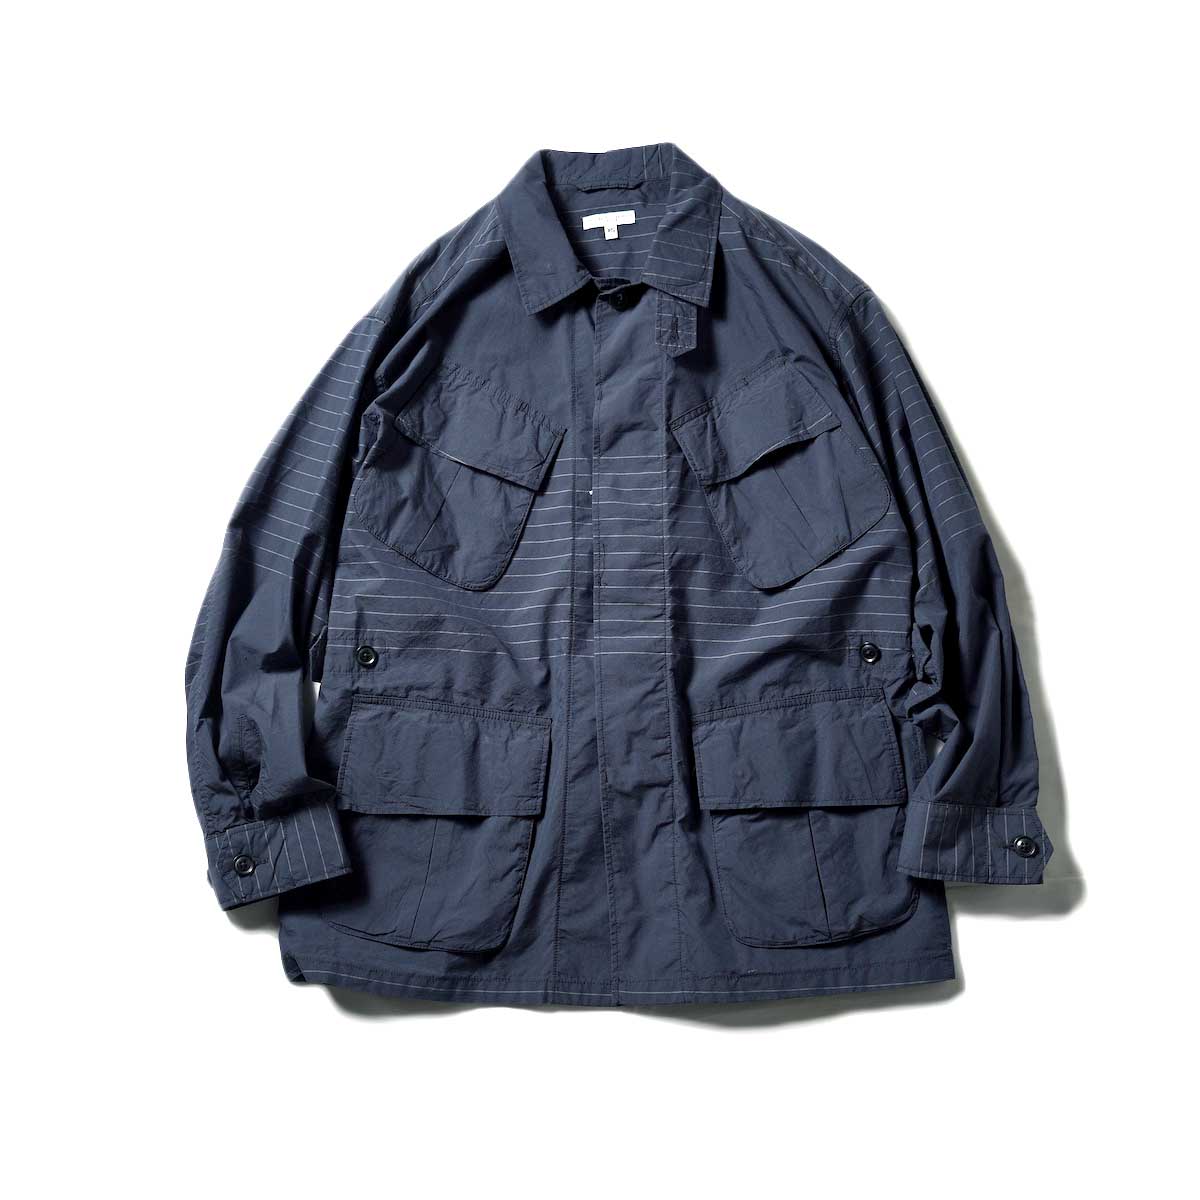 Engineered Garments / Jungle Fatigue Jacket - Nyco Horizontal Stripe